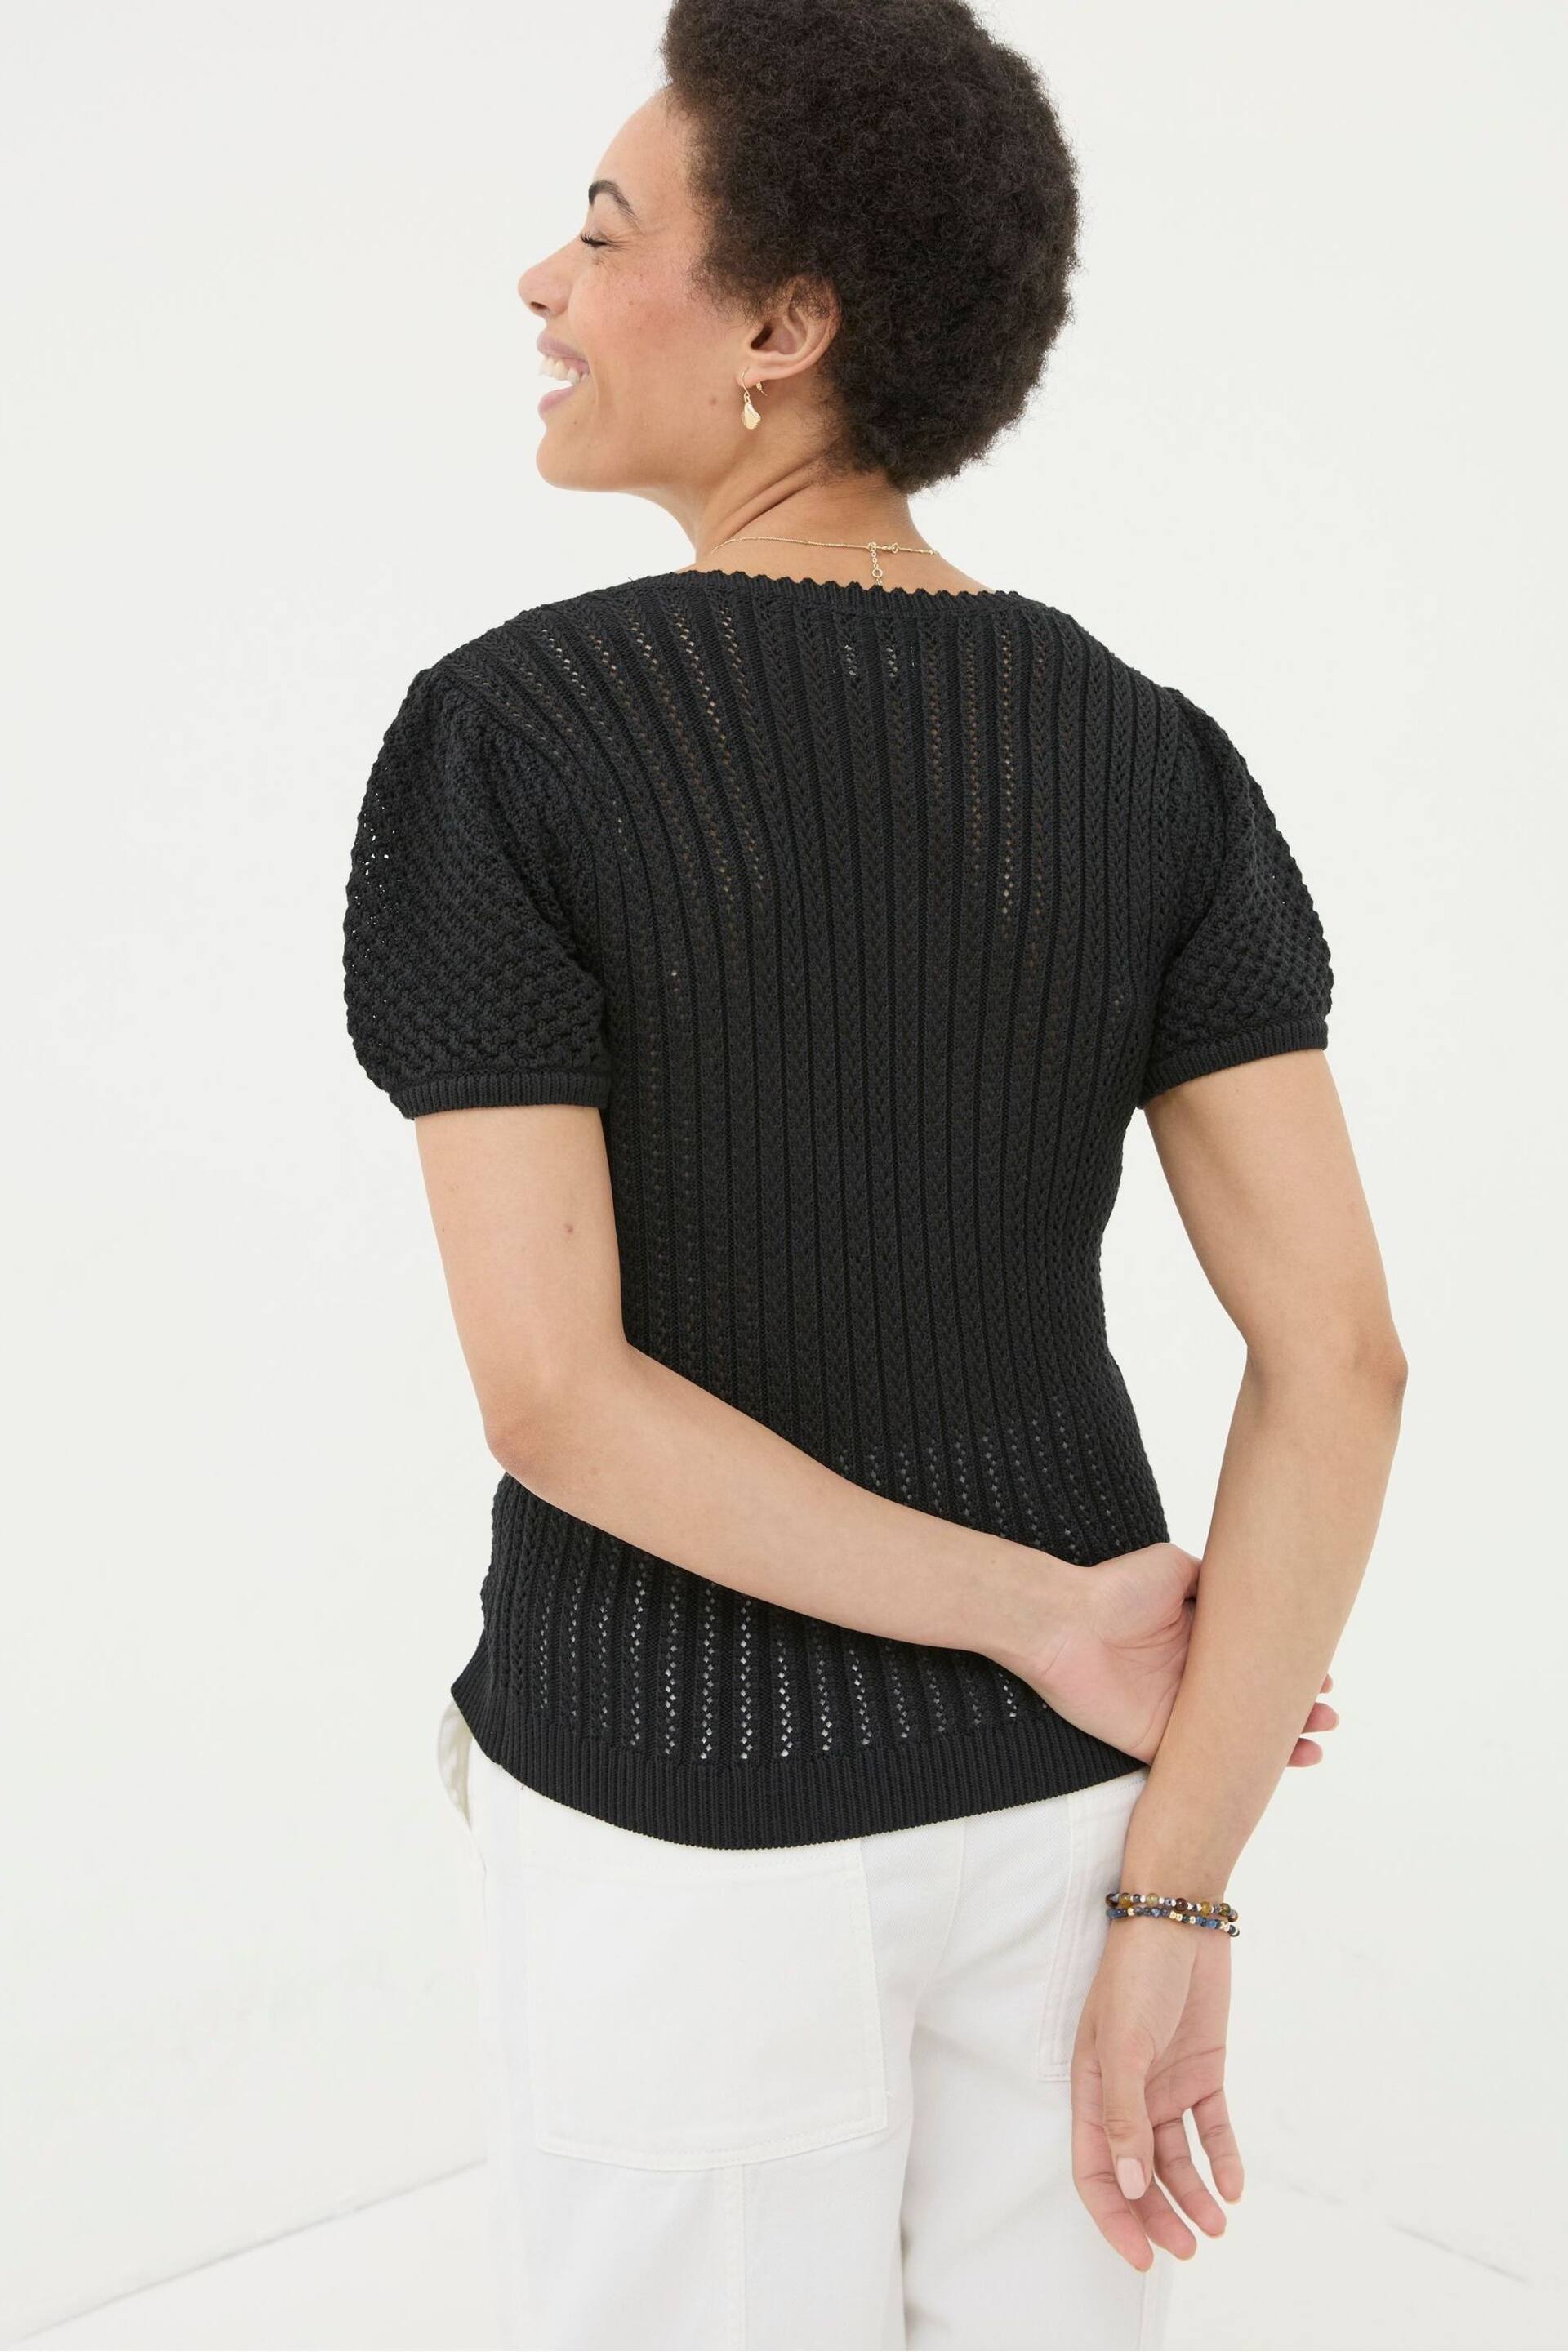 FatFace Black Ava Stitch Knit T-Shirt - Image 2 of 5